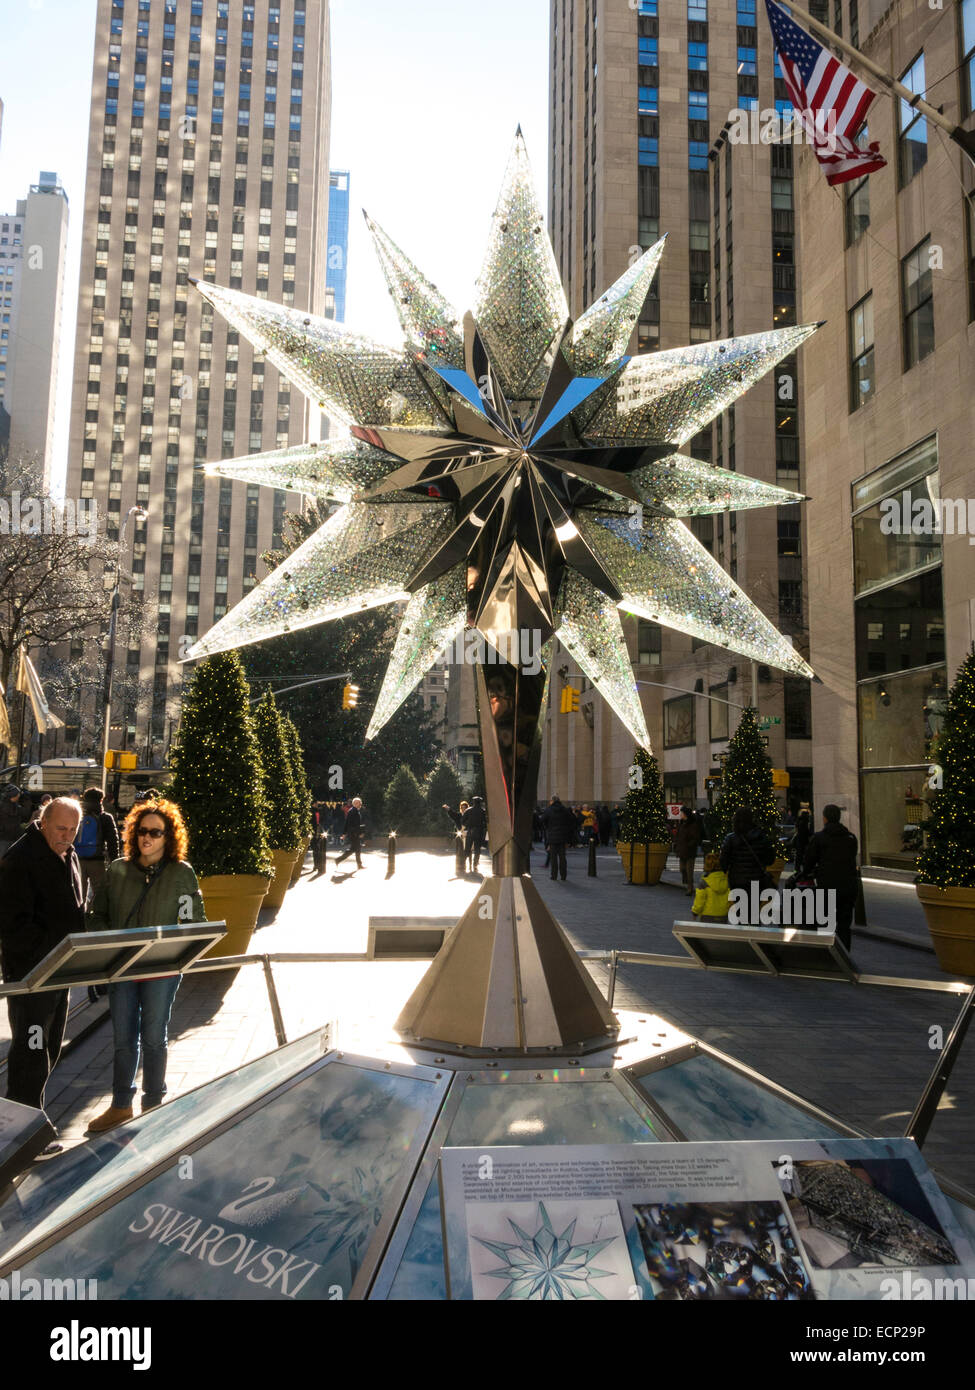 zand grond Verlammen Swarovski Crystal Christmas Tree Star Replica, Rockefeller Center, NYC, USA  Stock Photo - Alamy